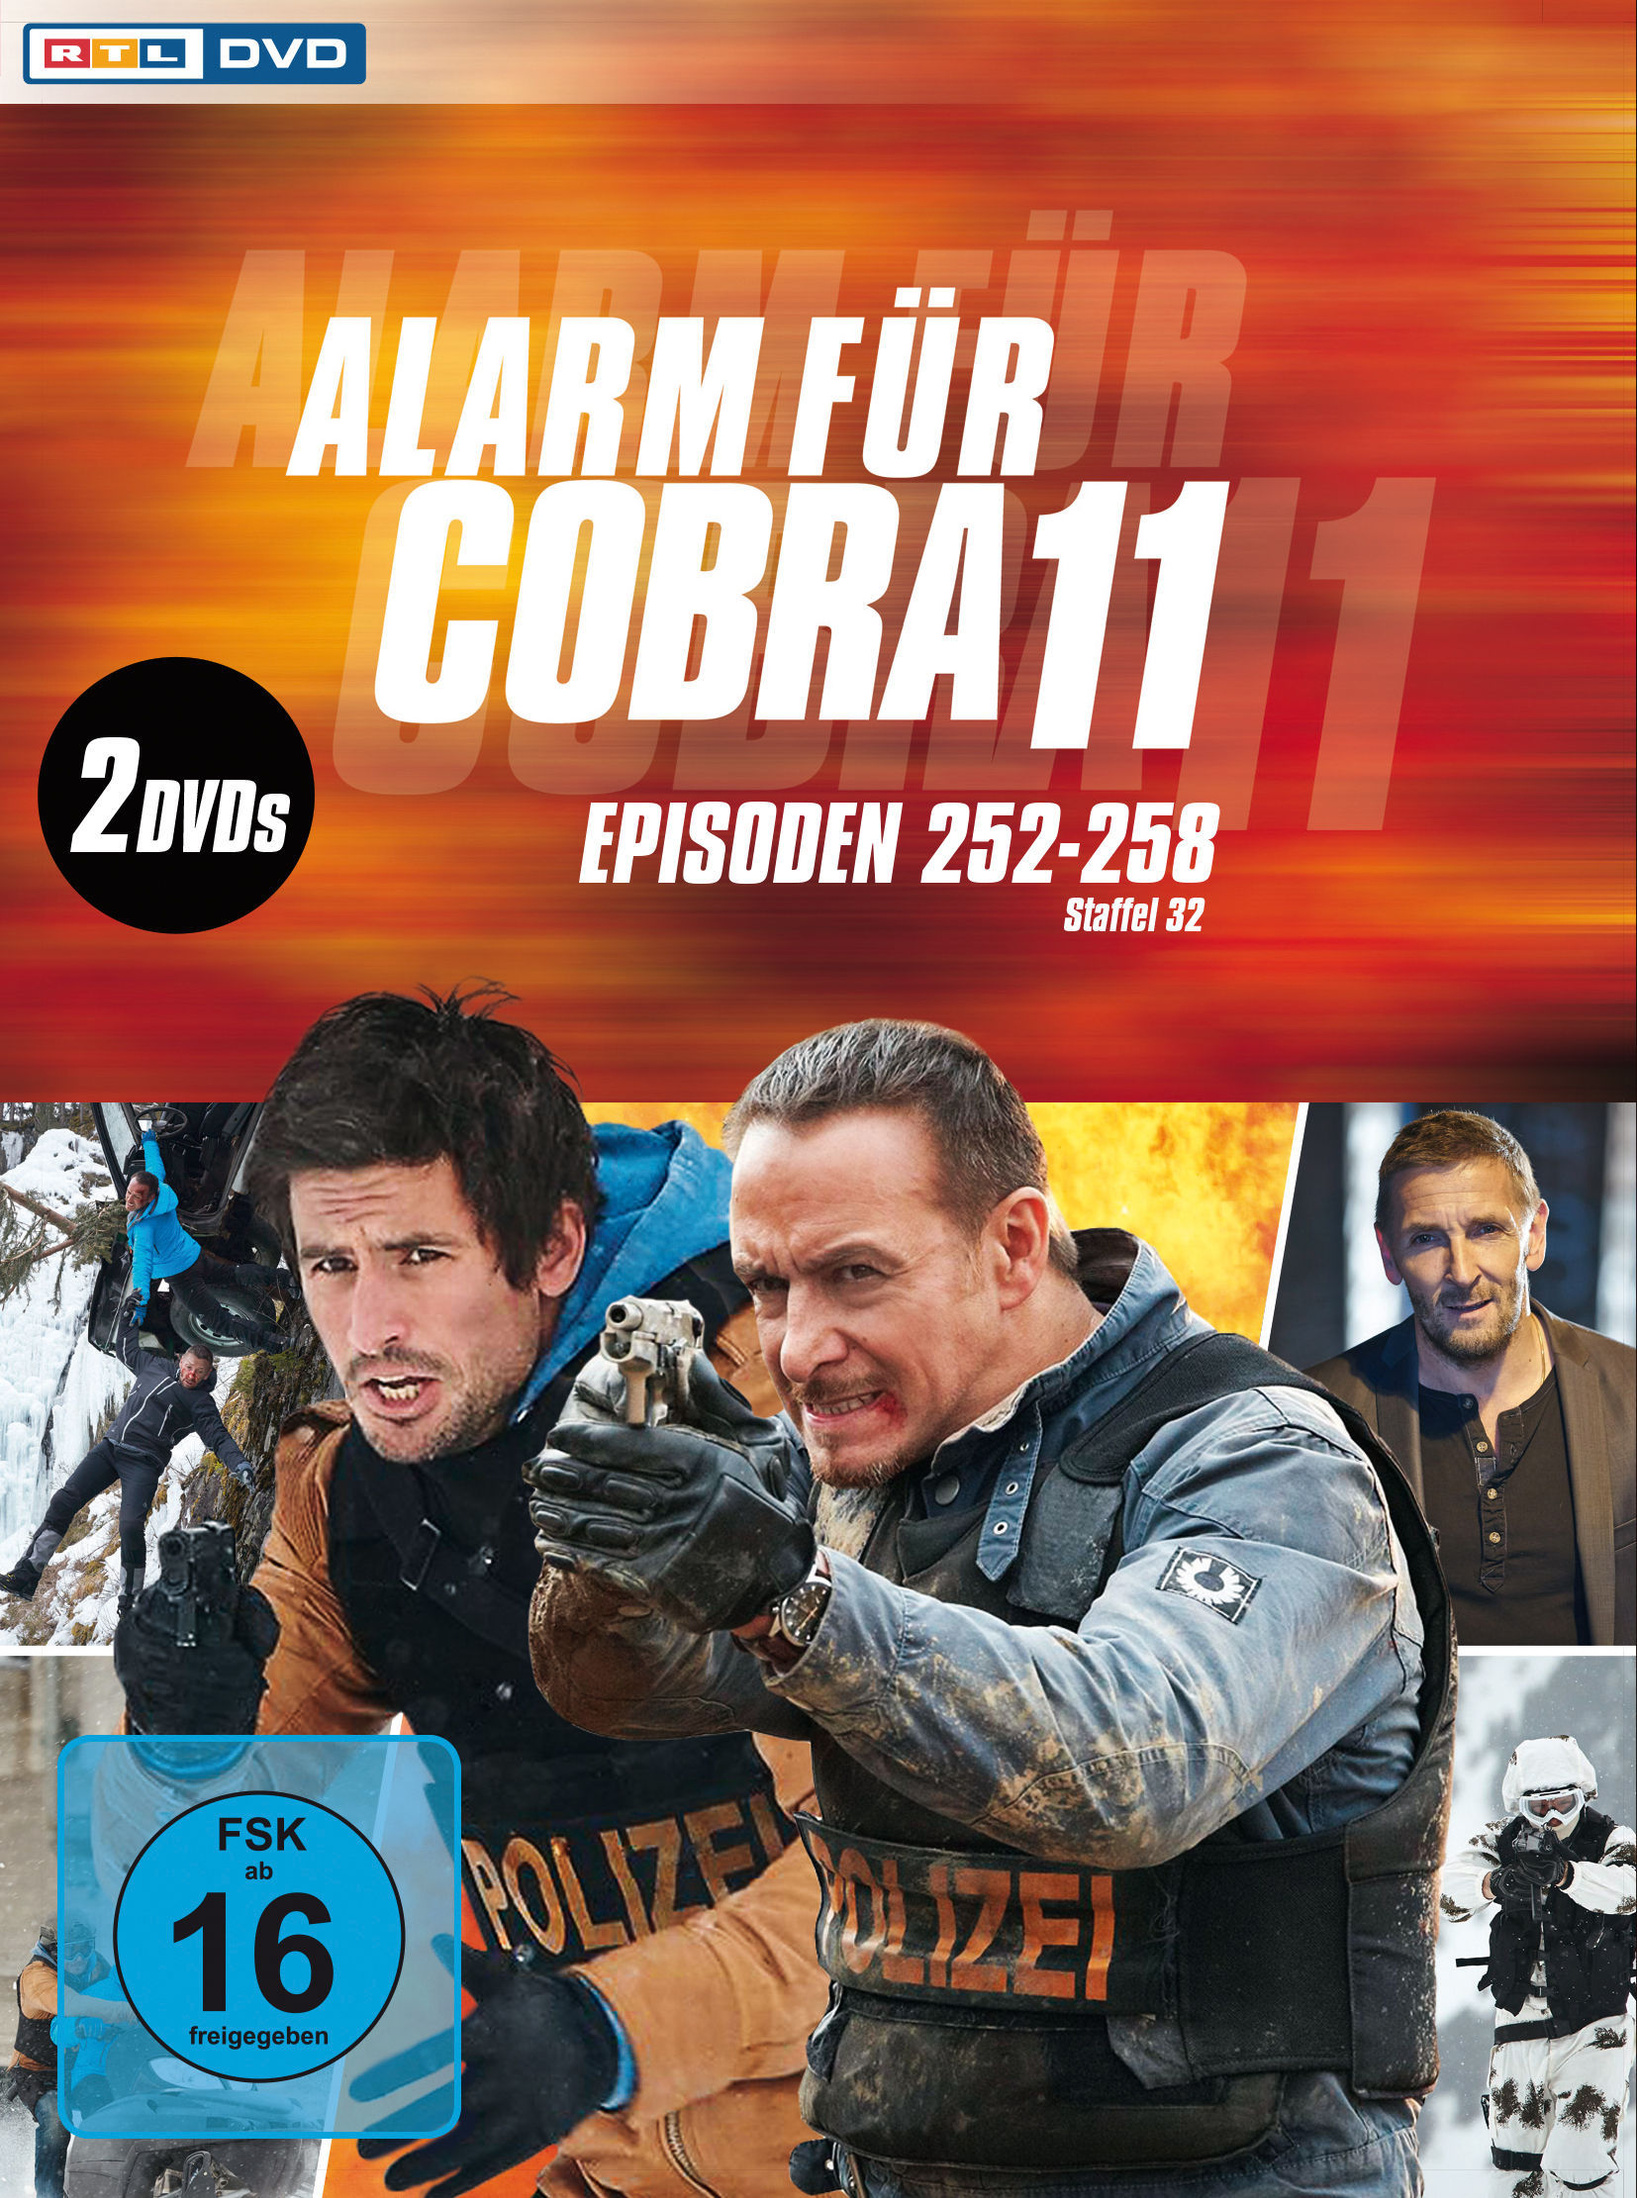 Alarm Fuer Cobra 11 Staffel 43